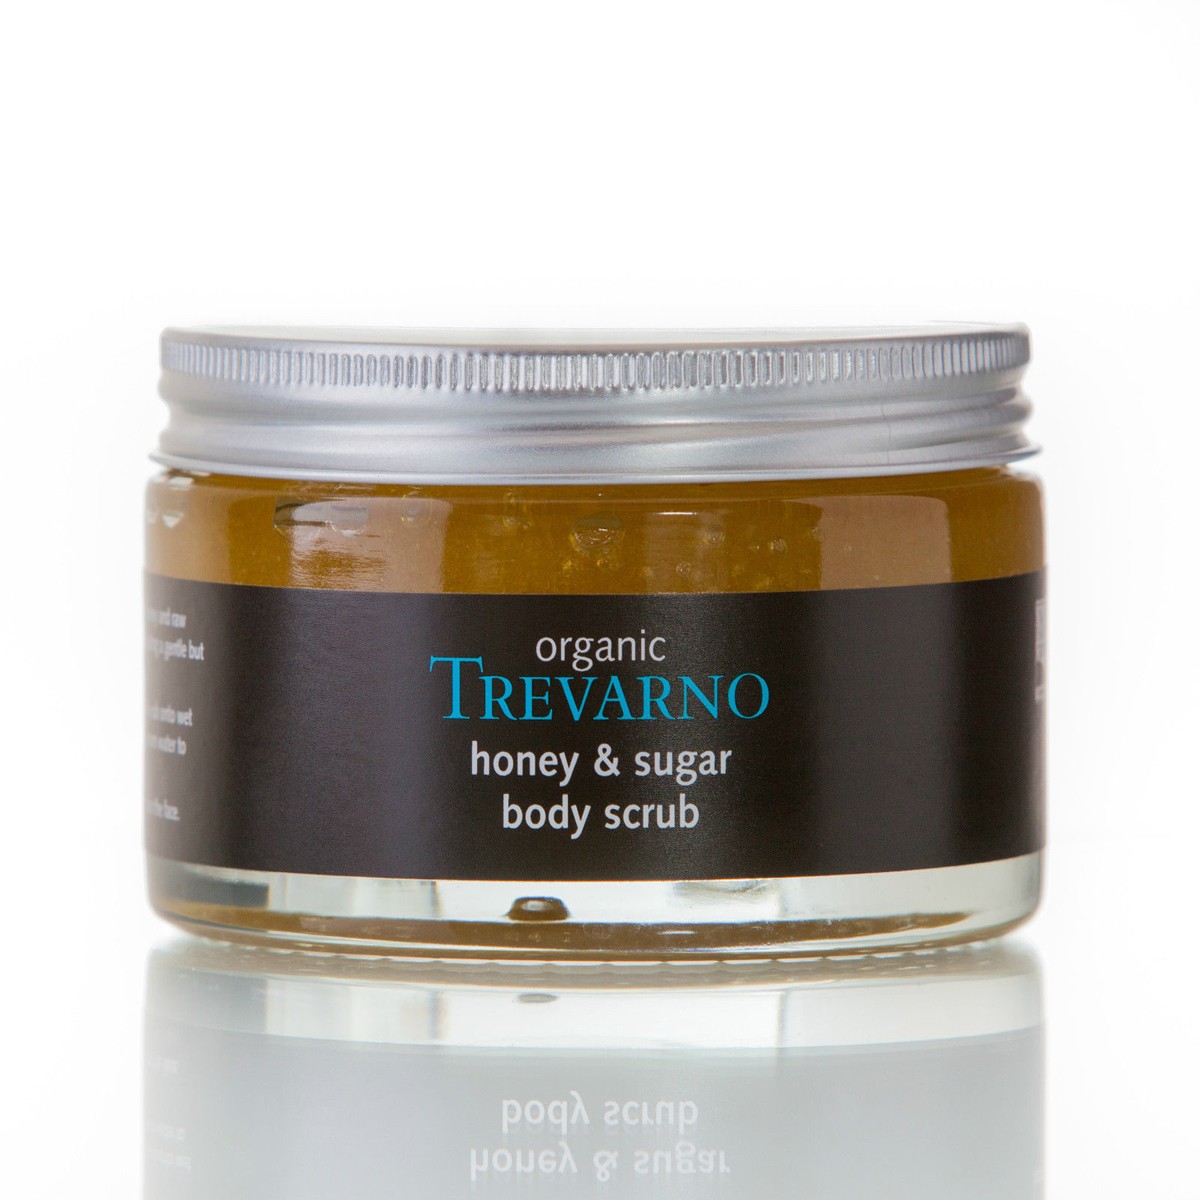 Organic Trevarno, Honey & Sugar Body Scrub